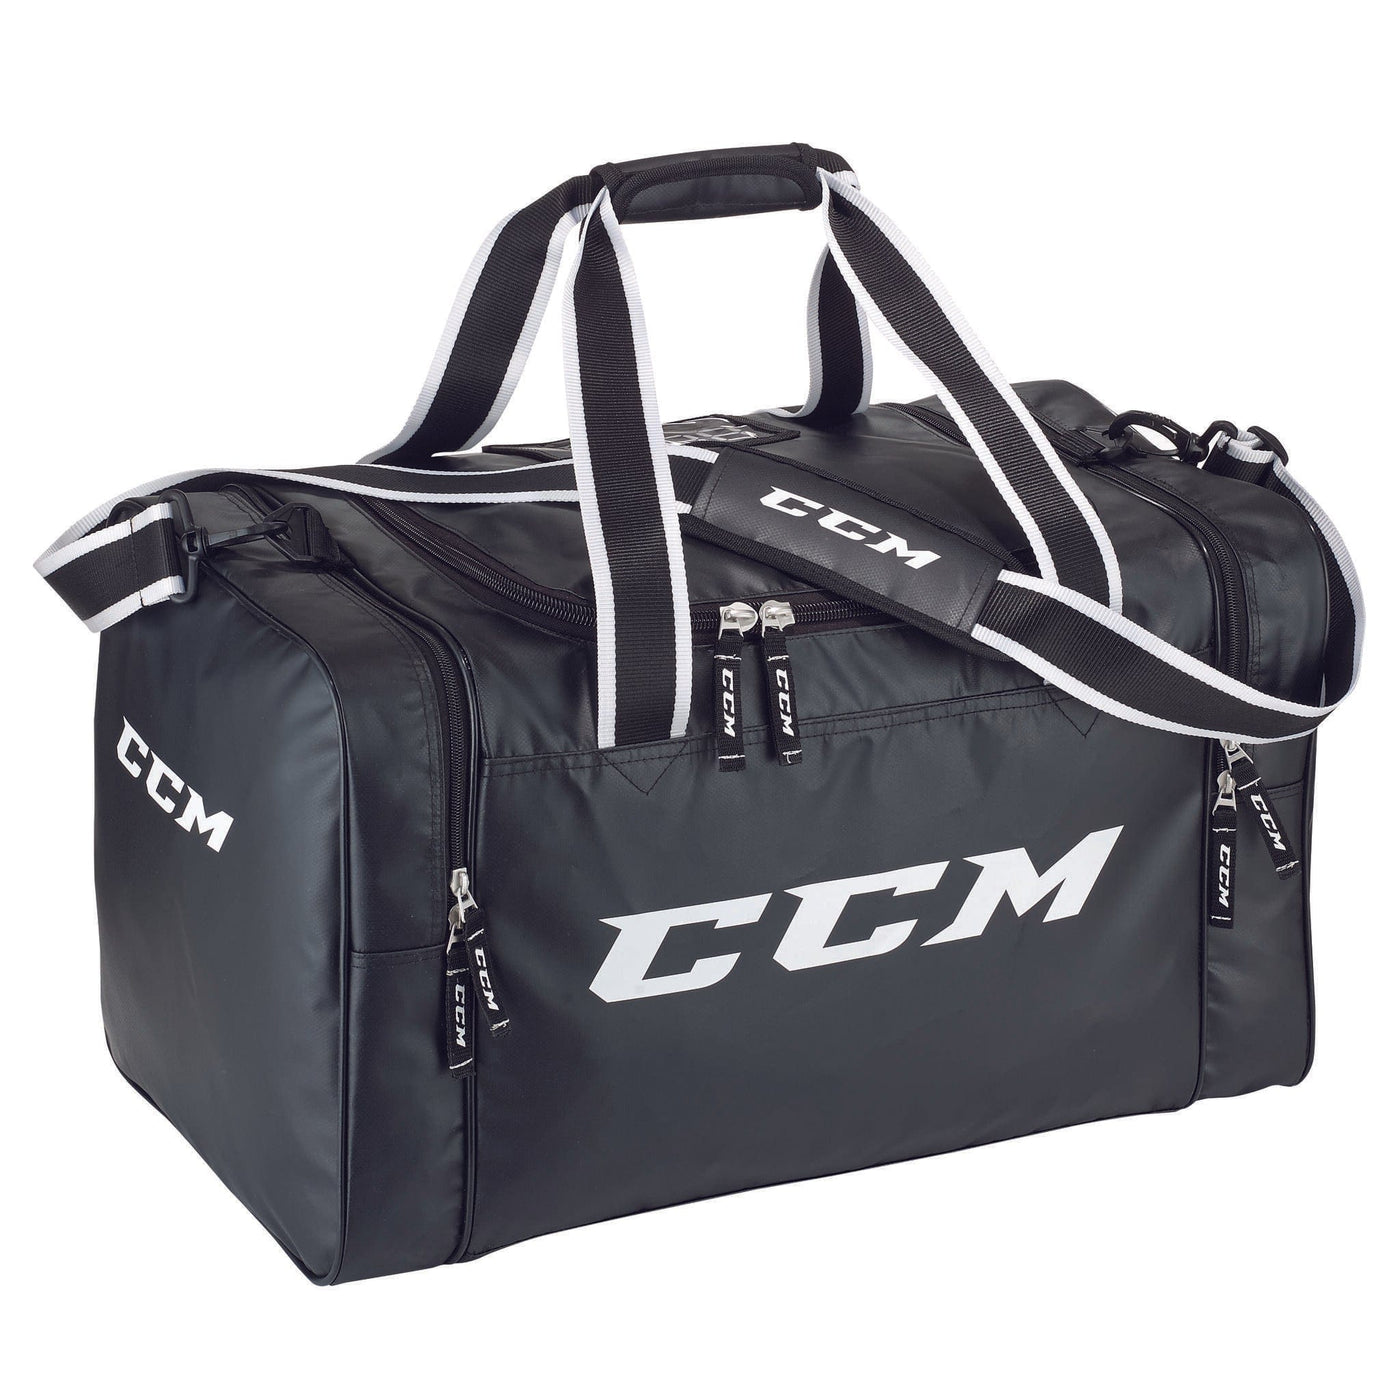 CCM Sport Team Duffle Bag - The Hockey Shop Source For Sports